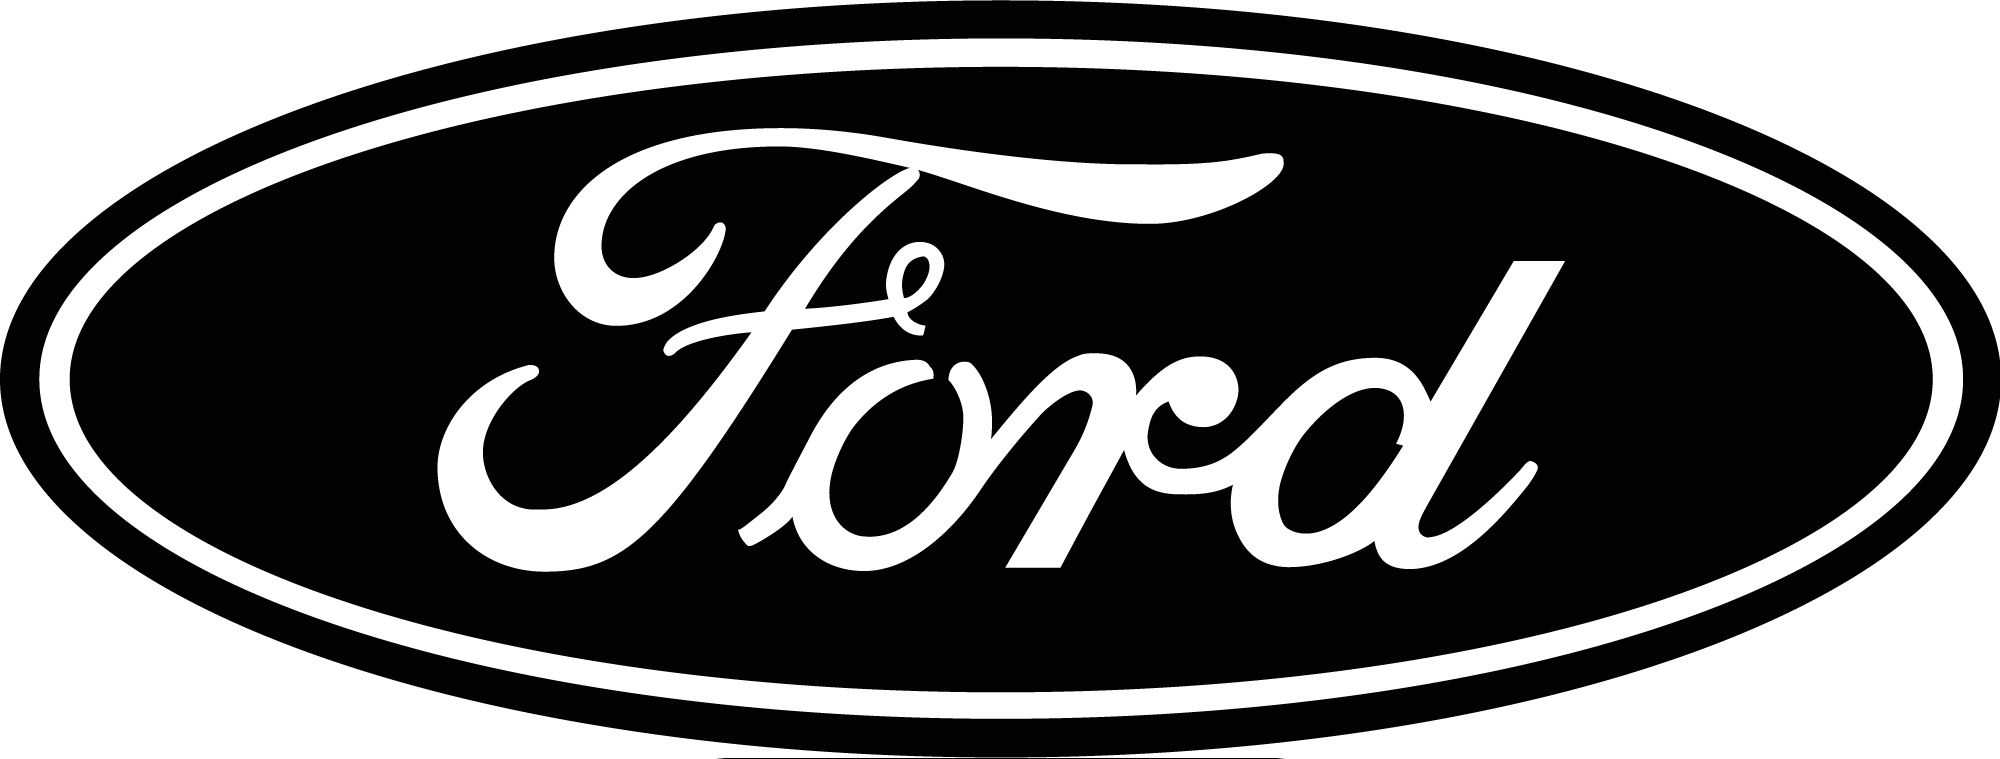 ford logo Black